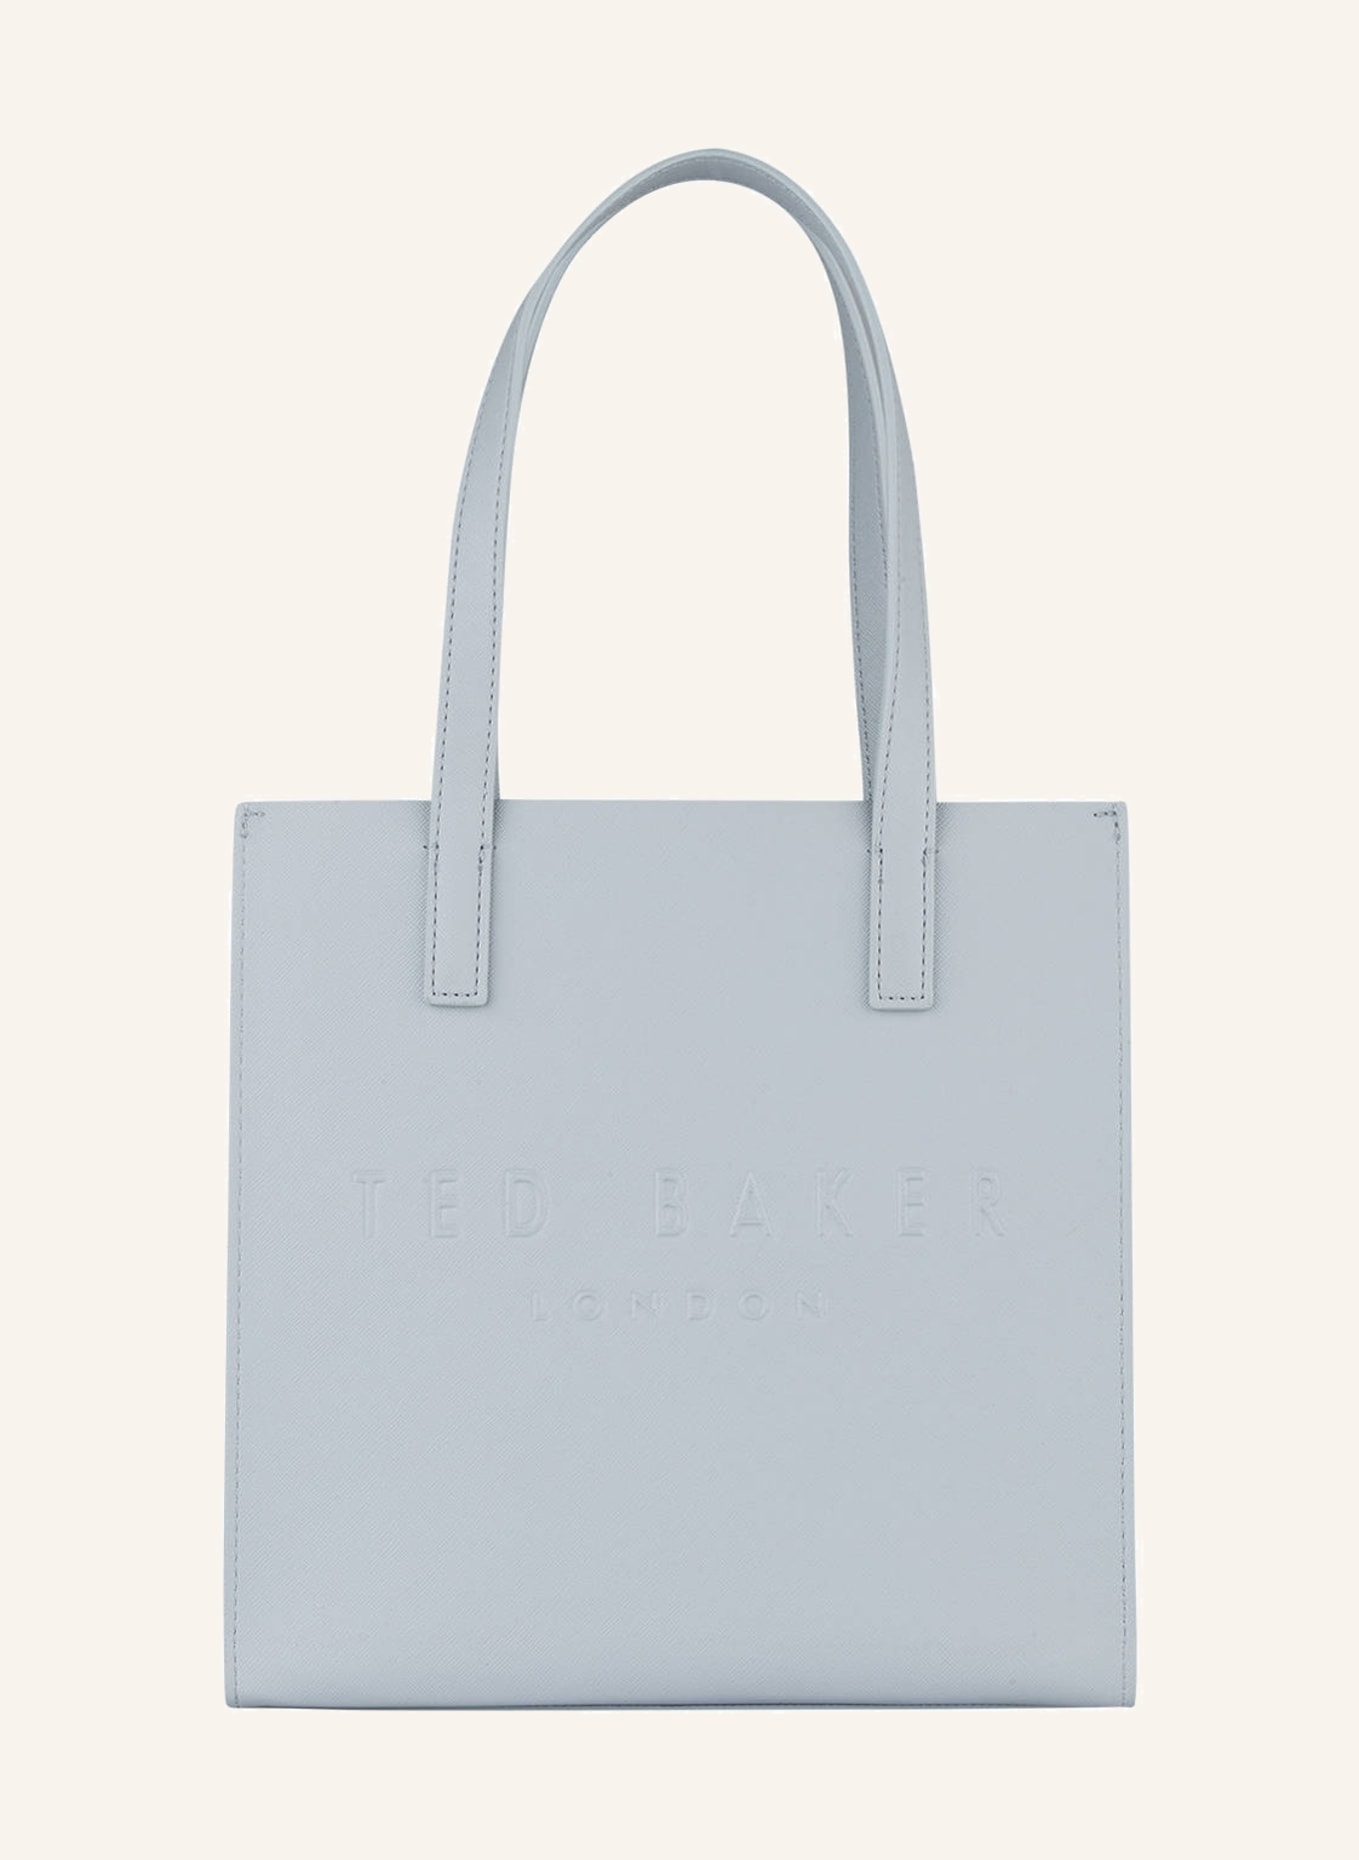 TED BAKER Handtasche SEACON SMALL, Farbe: HELLGRAU (Bild 1)